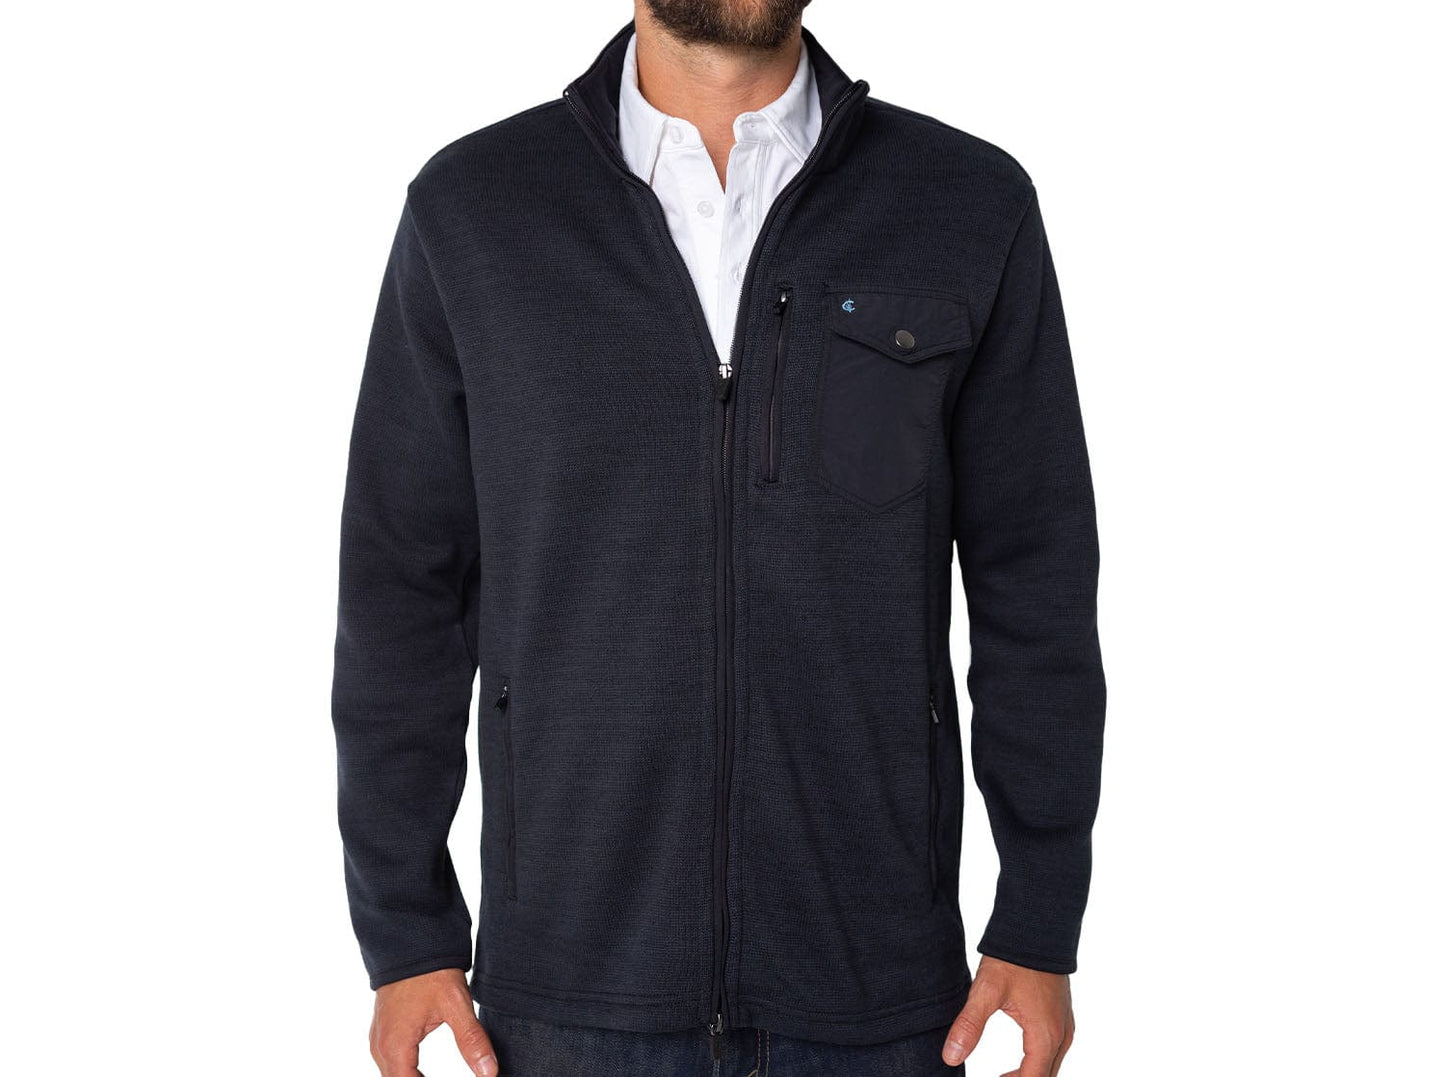 Sweater Fleece Jacket - Black Sheep